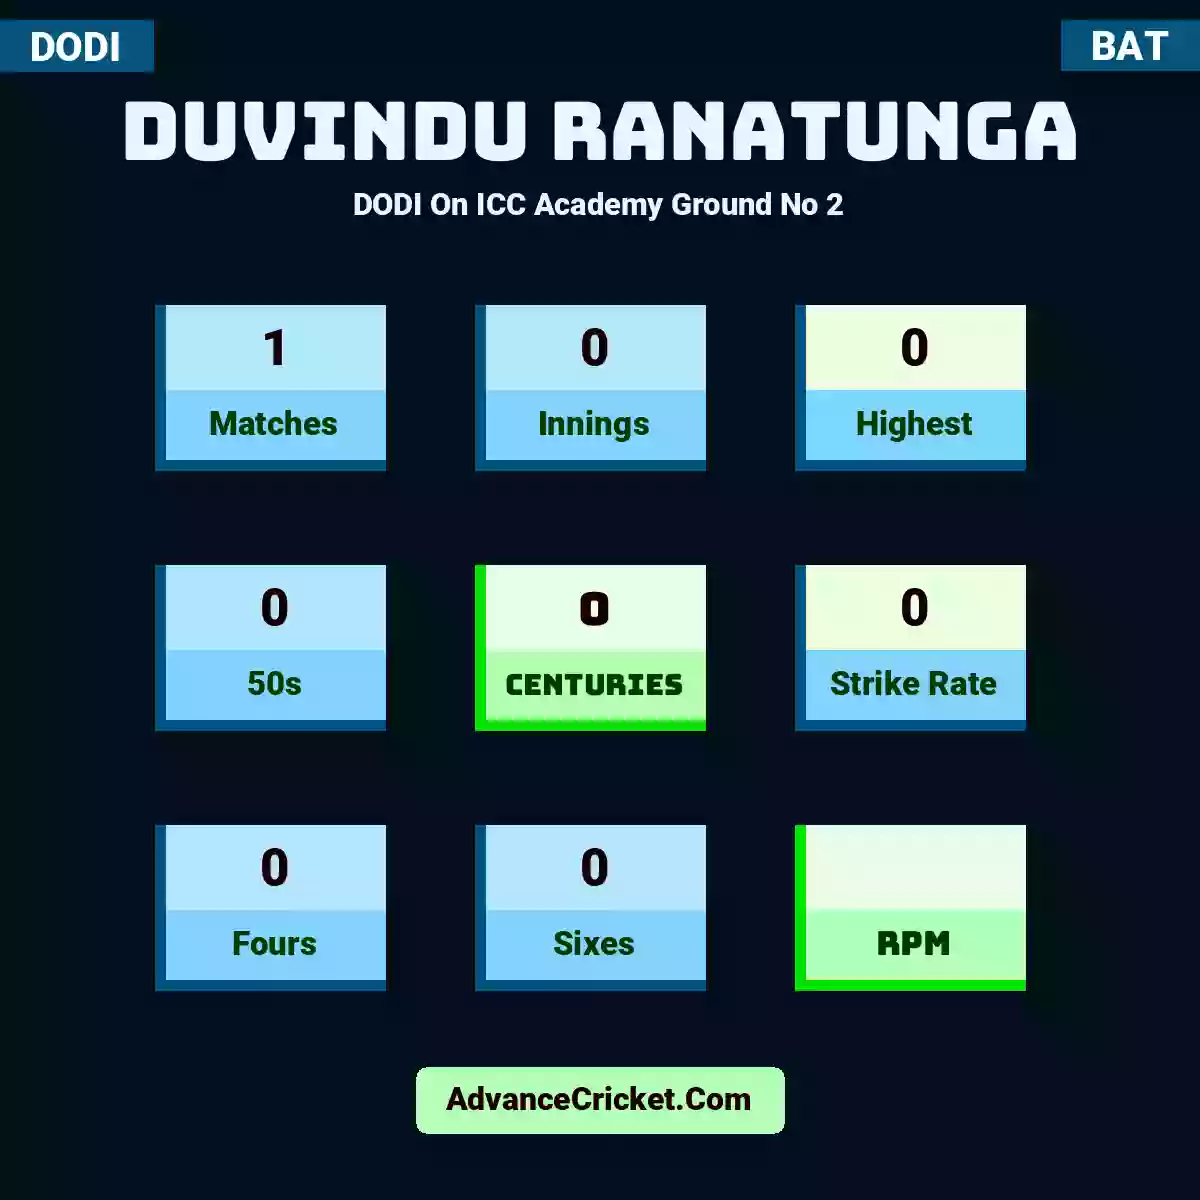 Duvindu Ranatunga DODI  On ICC Academy Ground No 2, Duvindu Ranatunga played 1 matches, scored 0 runs as highest, 0 half-centuries, and 0 centuries, with a strike rate of 0. D.Ranatunga hit 0 fours and 0 sixes.